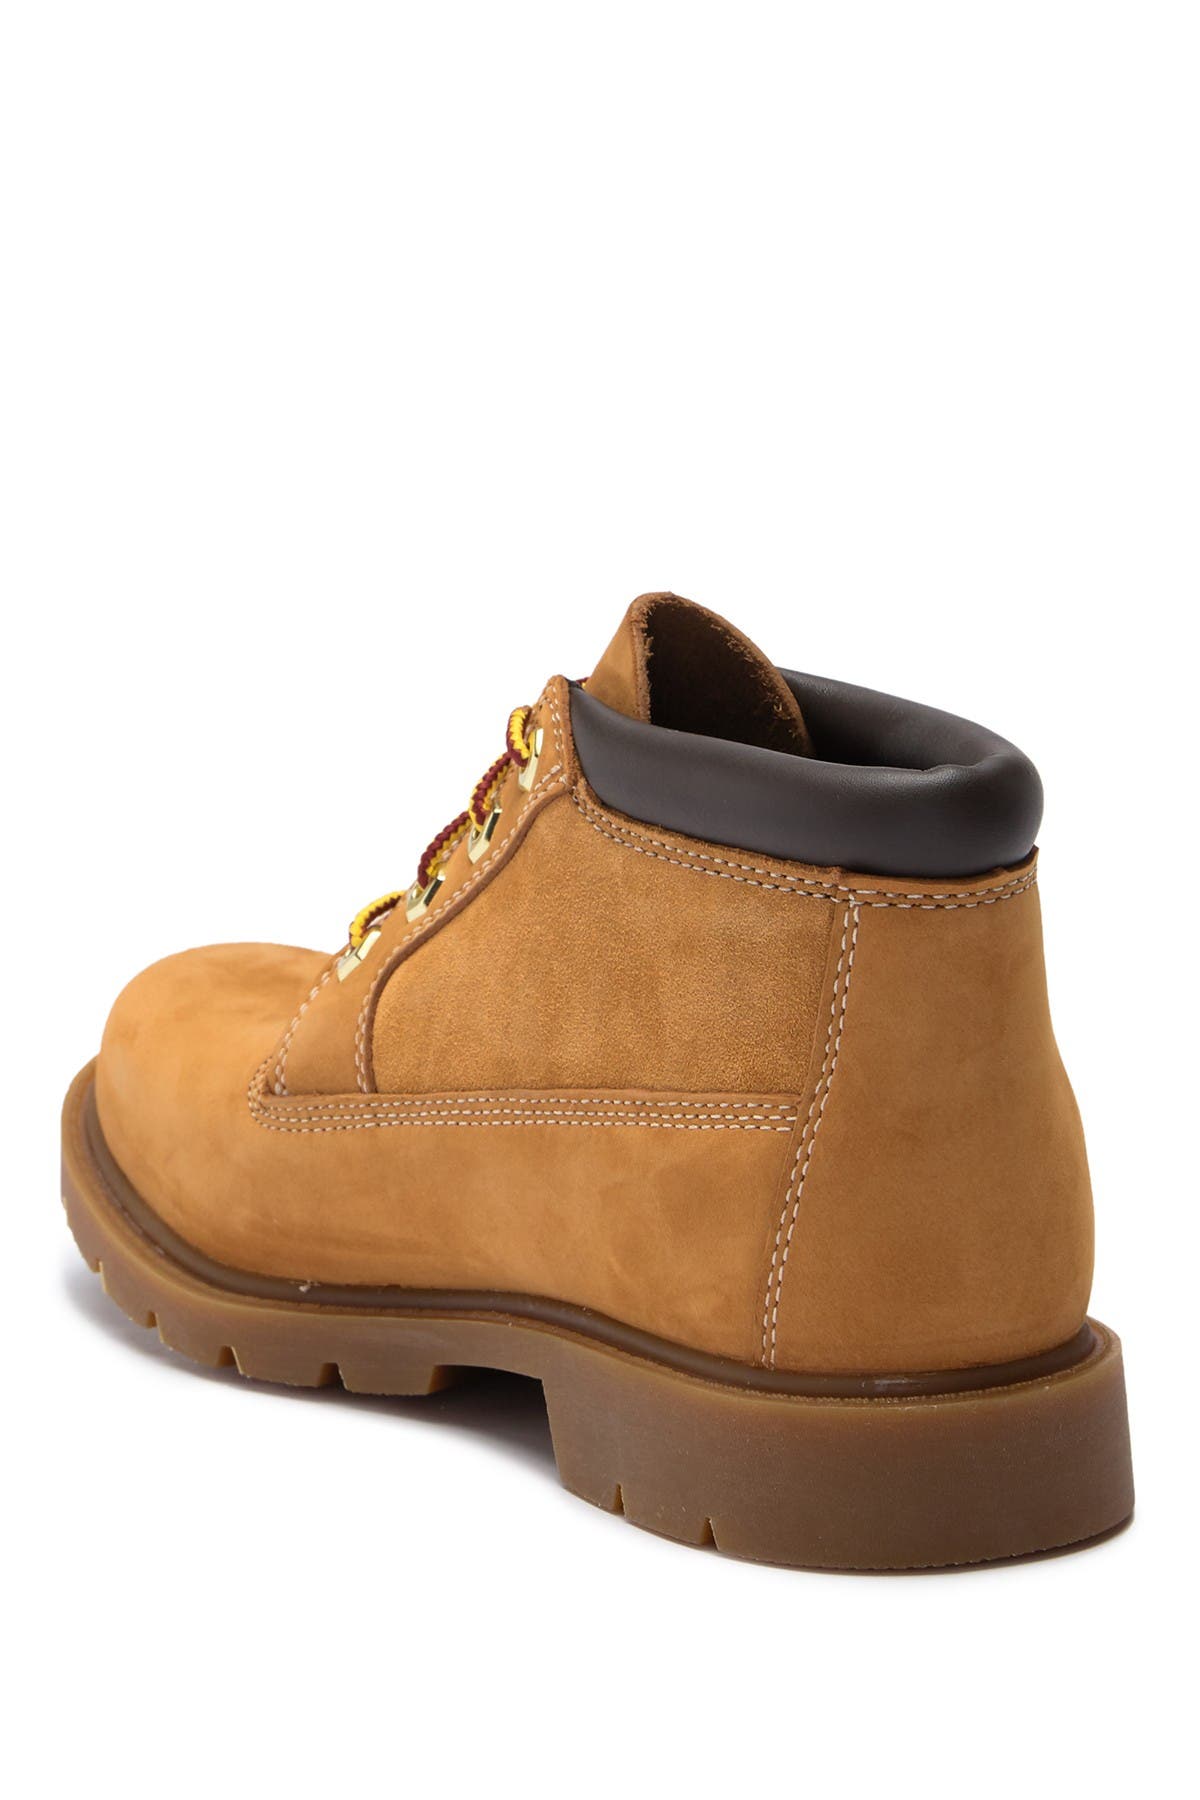 rhinebeck leather chukka boot